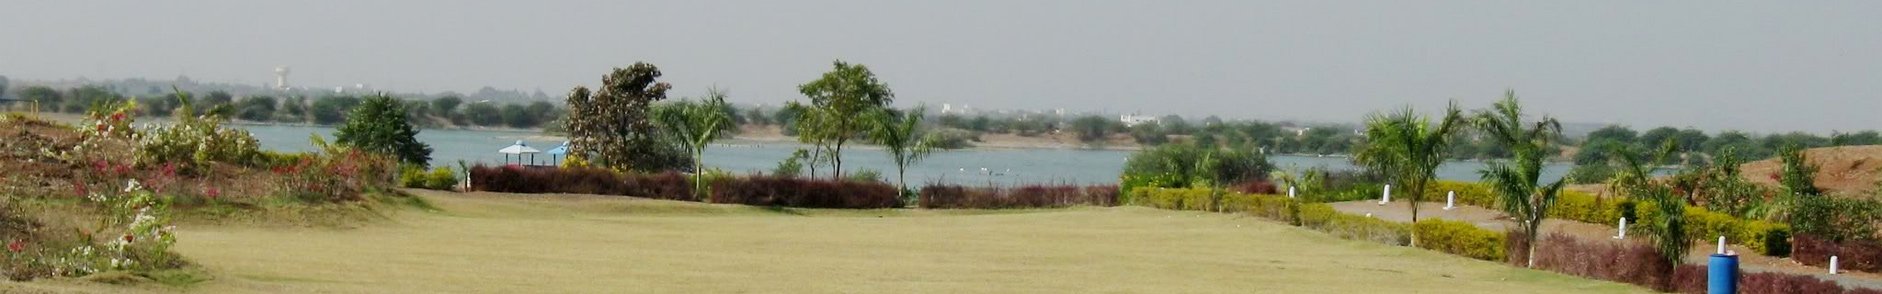 Lal Pari Lake and Randerda Rajkot, Gujarat